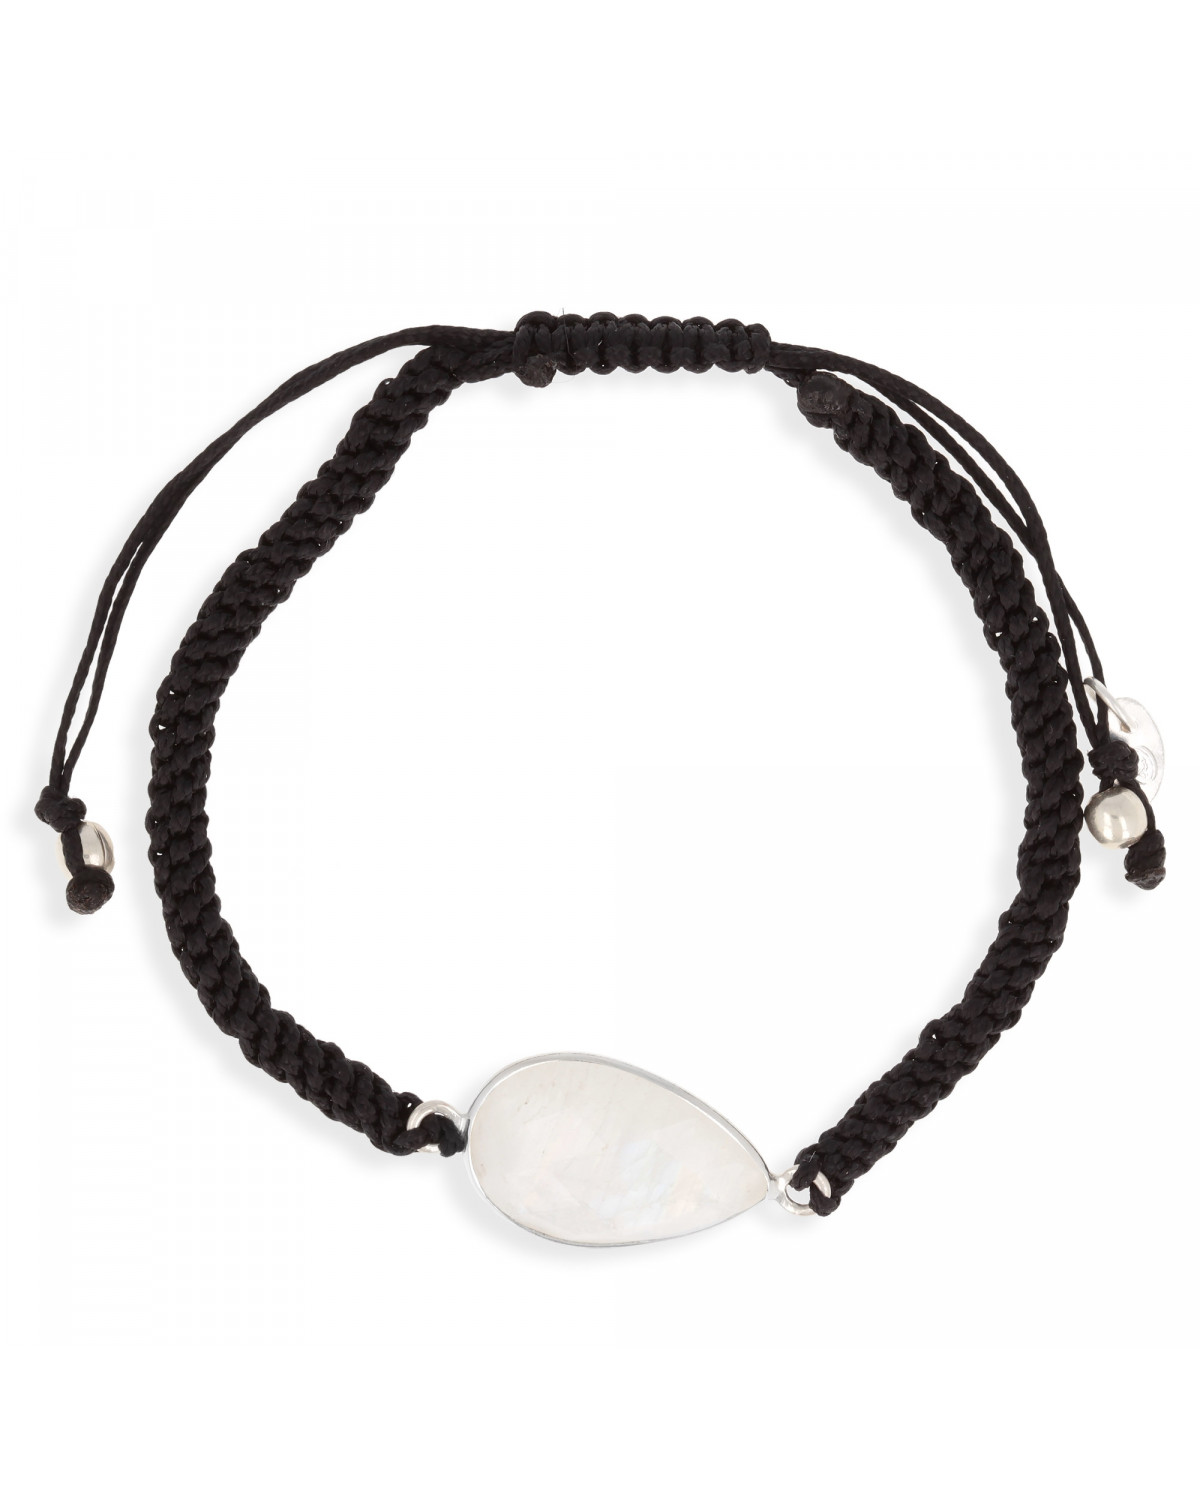 Girl Gift-Bracelet-Fine Stones-Sterling Silver-Adjustable Cord-Woman